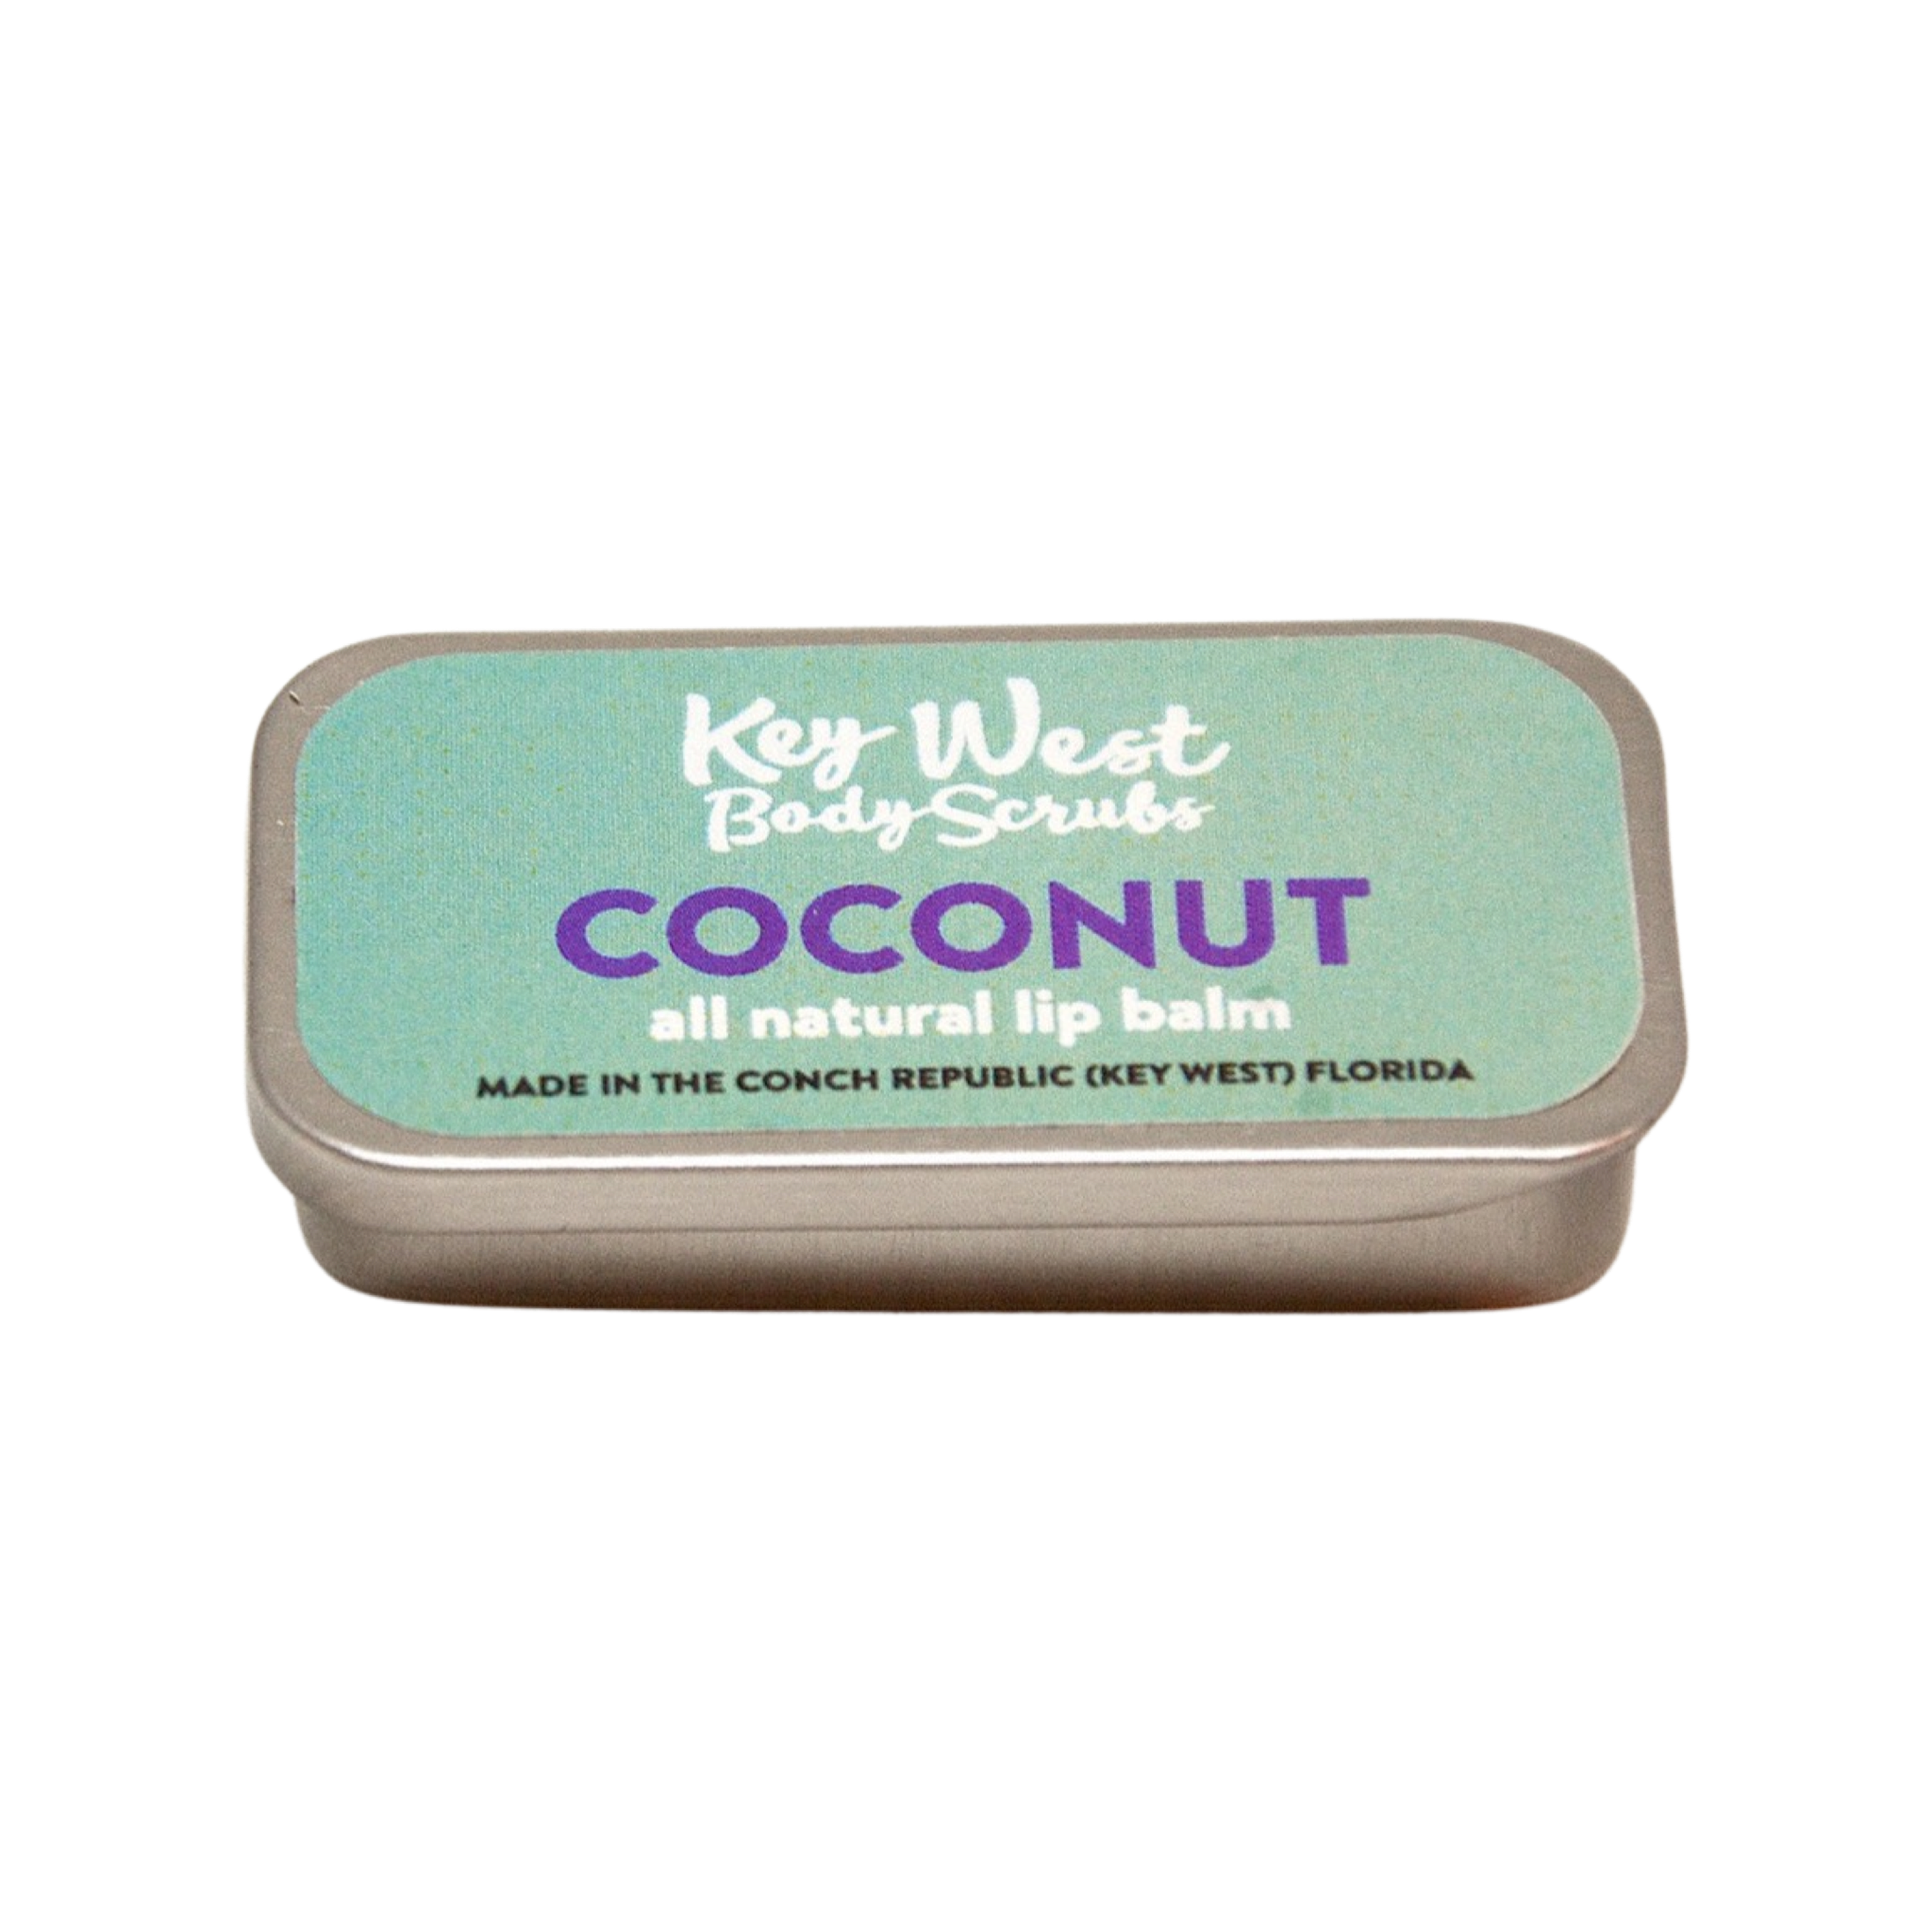 Key West Body Scrubs - Coconut Natural Lip Balm